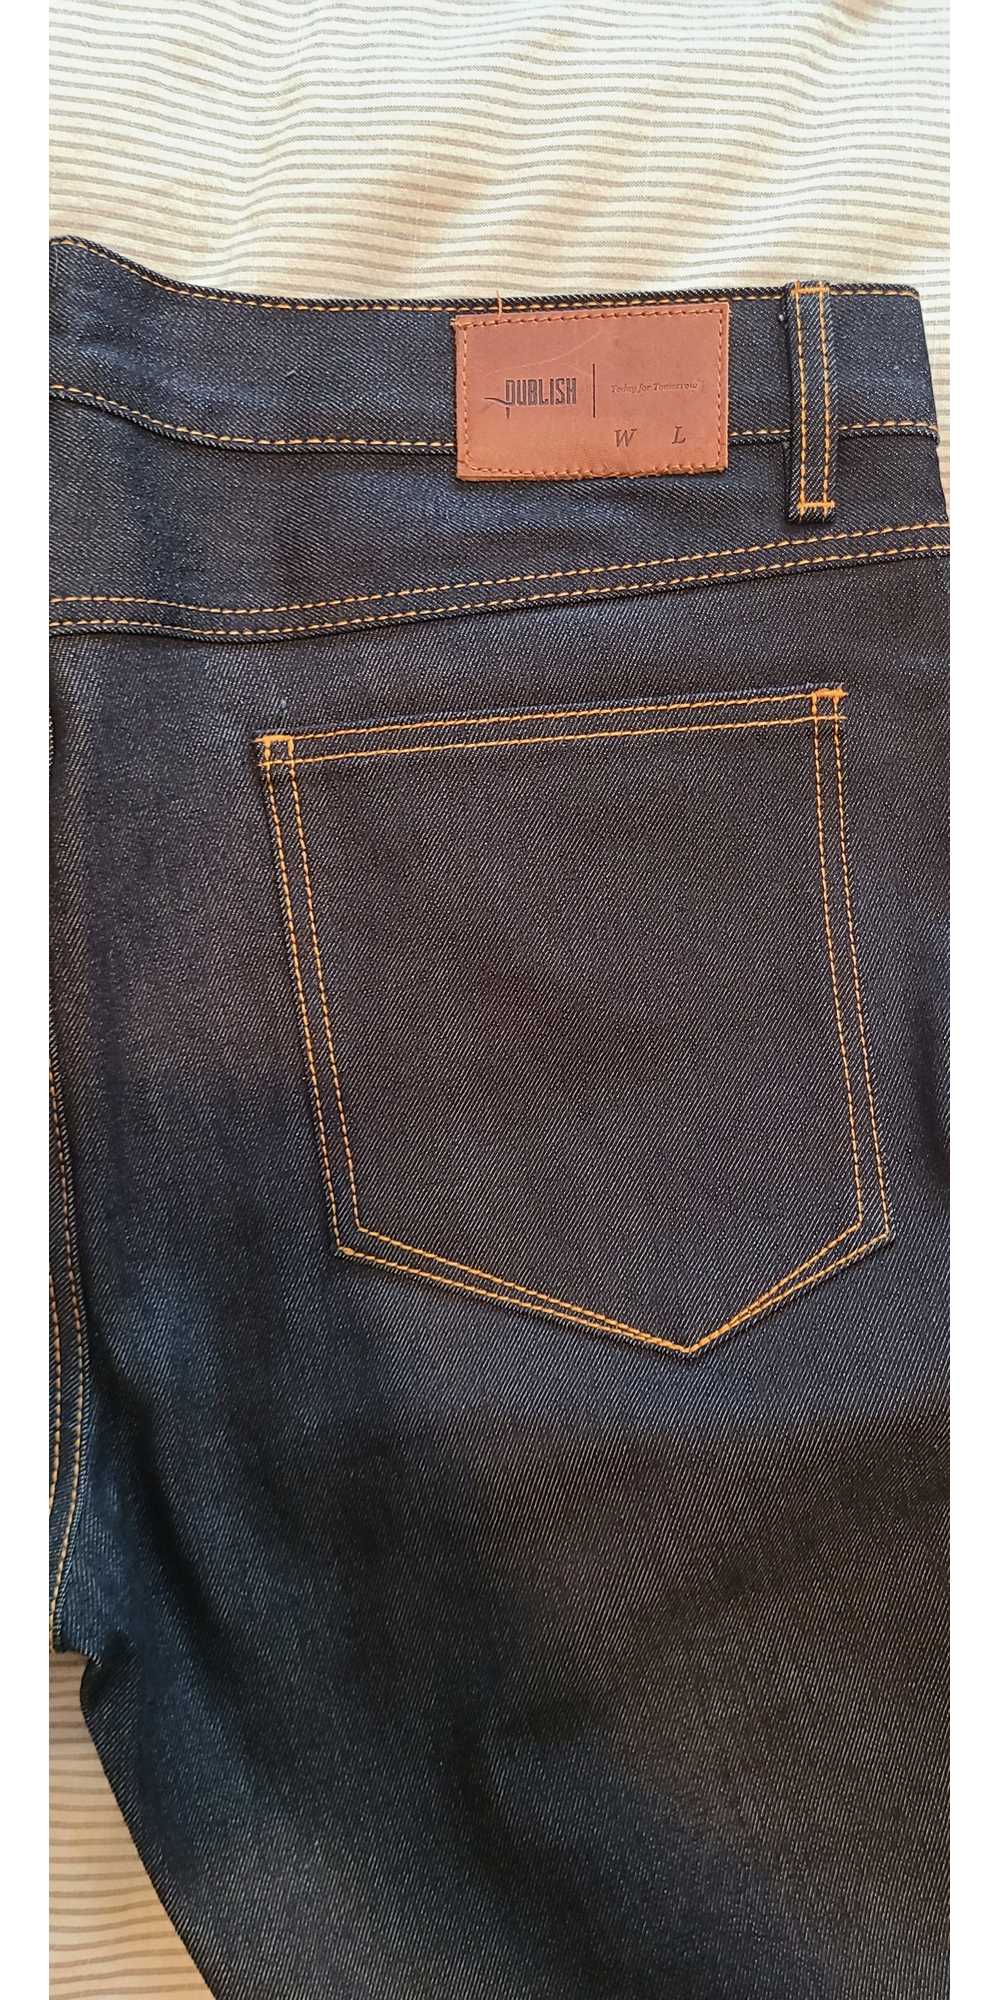 Publish Publish Brand Dark Denim Jeans - image 4